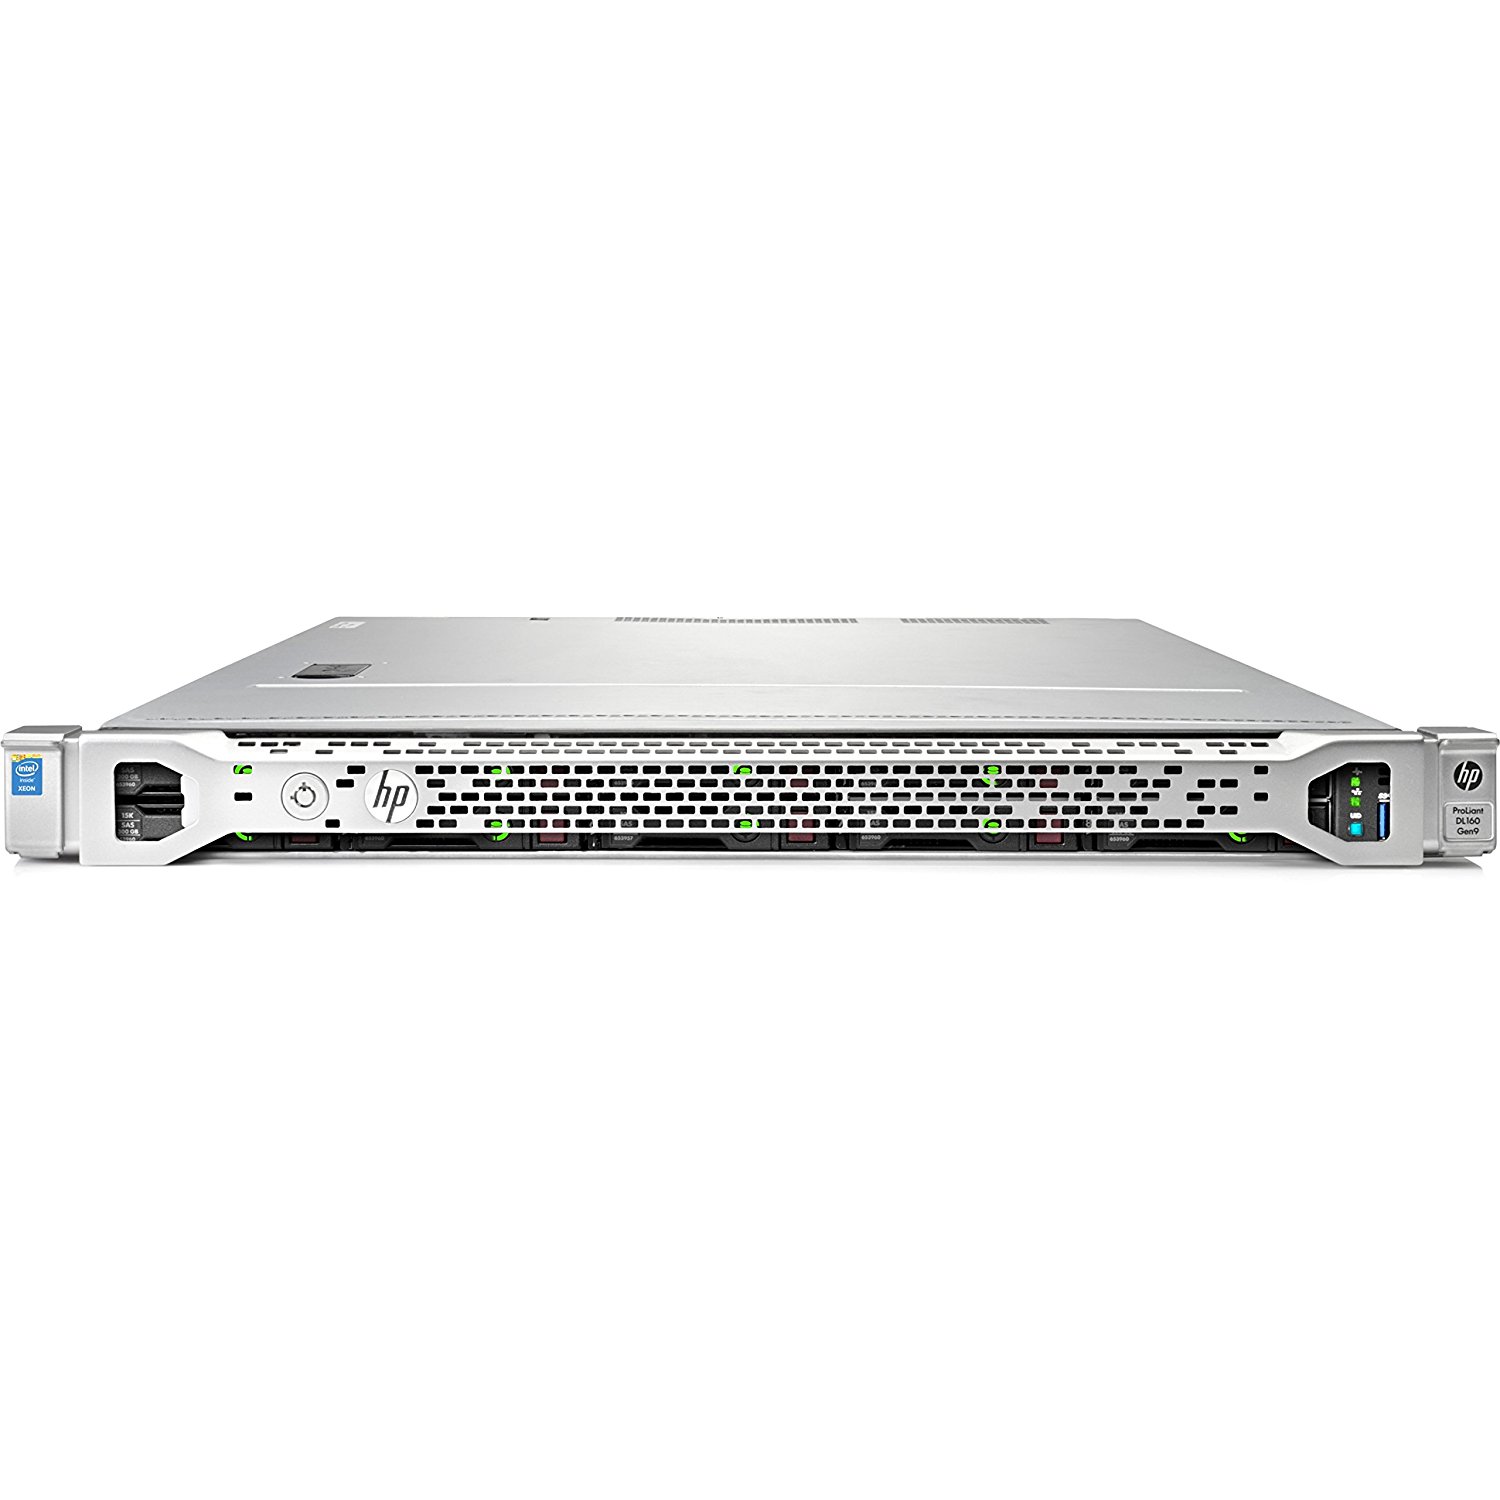 HPE PROLIANT DL160 GEN9 XEON E5-2609 V4 8 GB LFF US 120 V AC  230 V AC INTEL XEON E5-2609 v4 Octa-core (8 Core) 1.70 GHz Rack